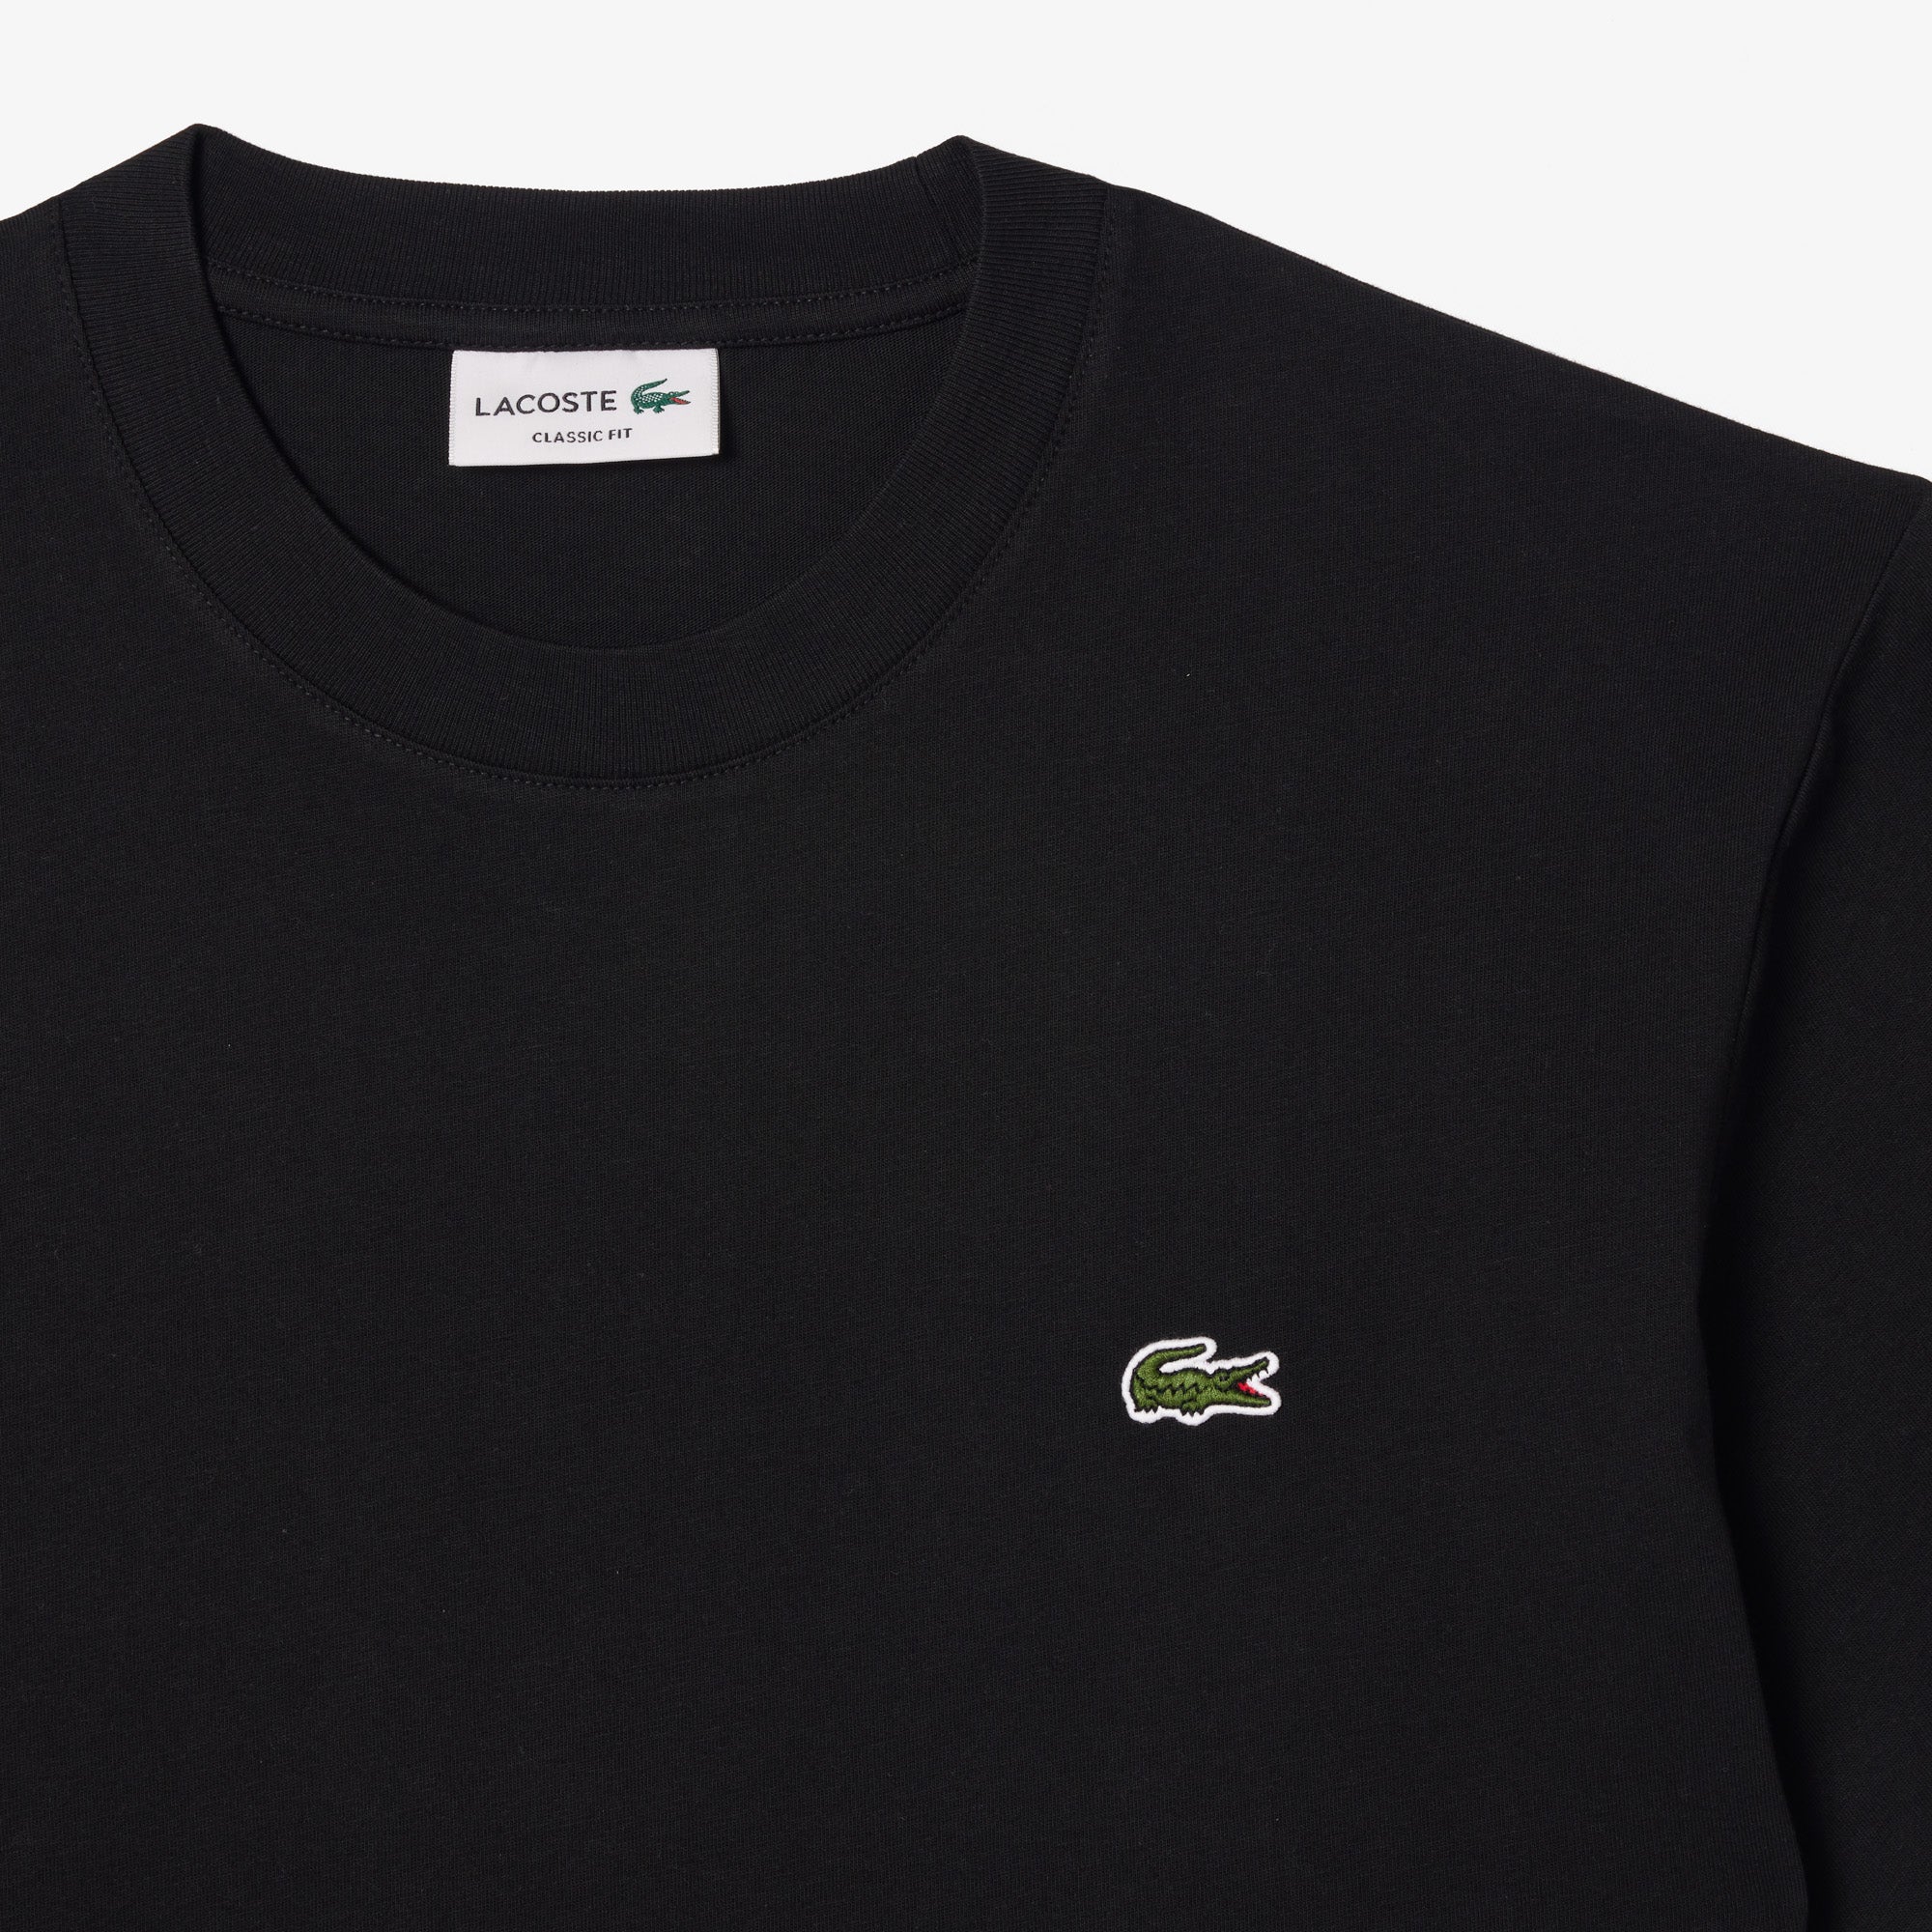 Lacoste Classic Fit T-Shirt aus schwarzem Baumwolljersey 